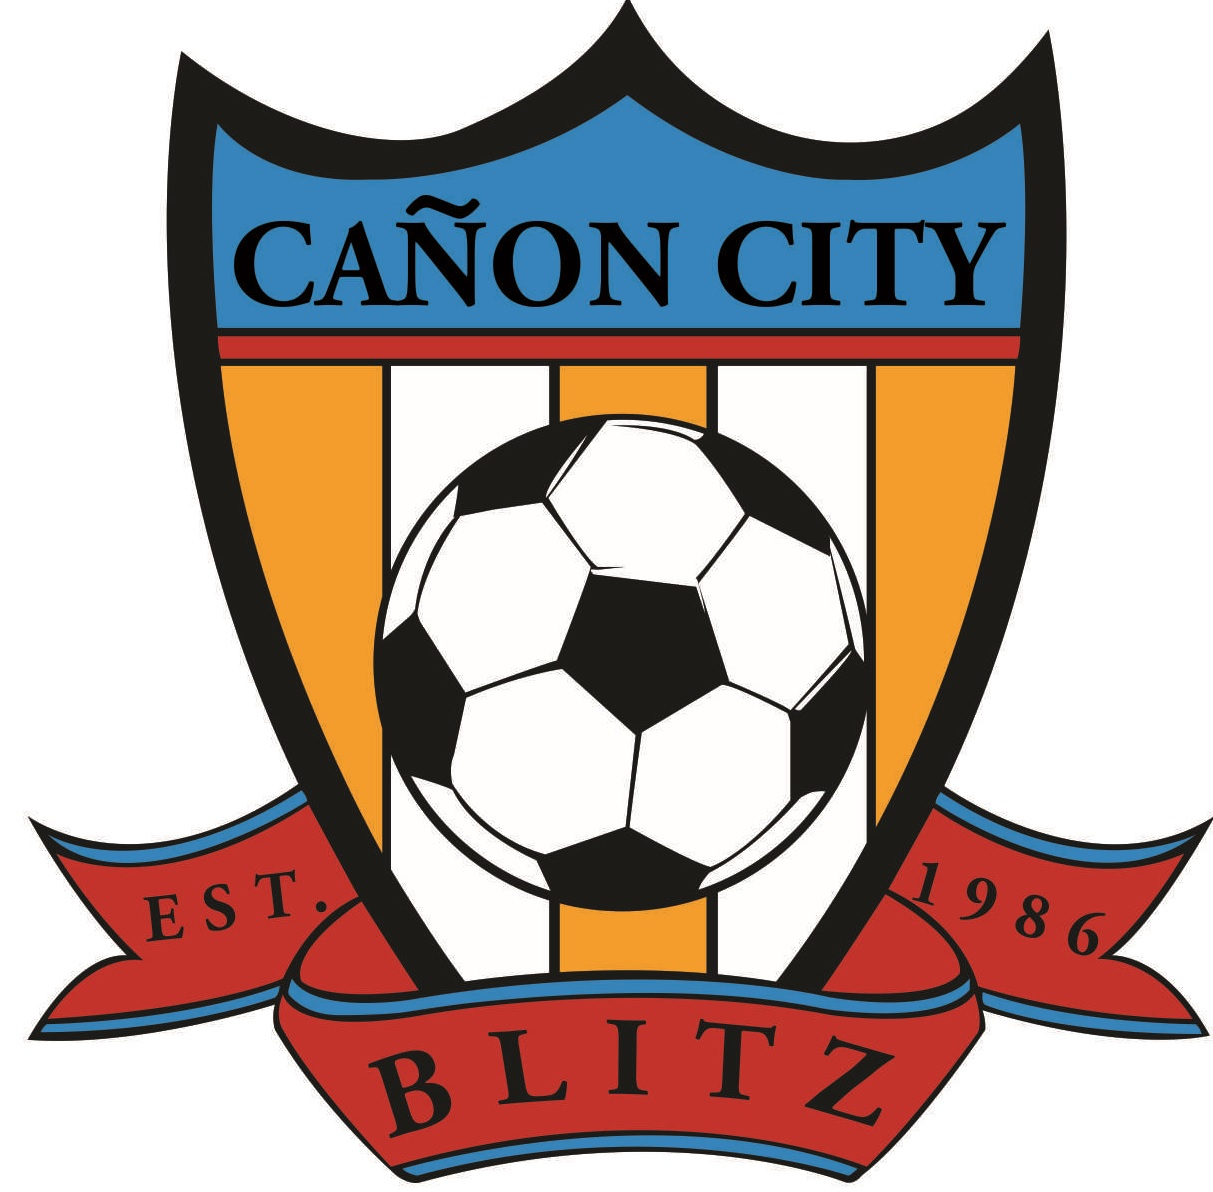 Canon City Blitz team badge